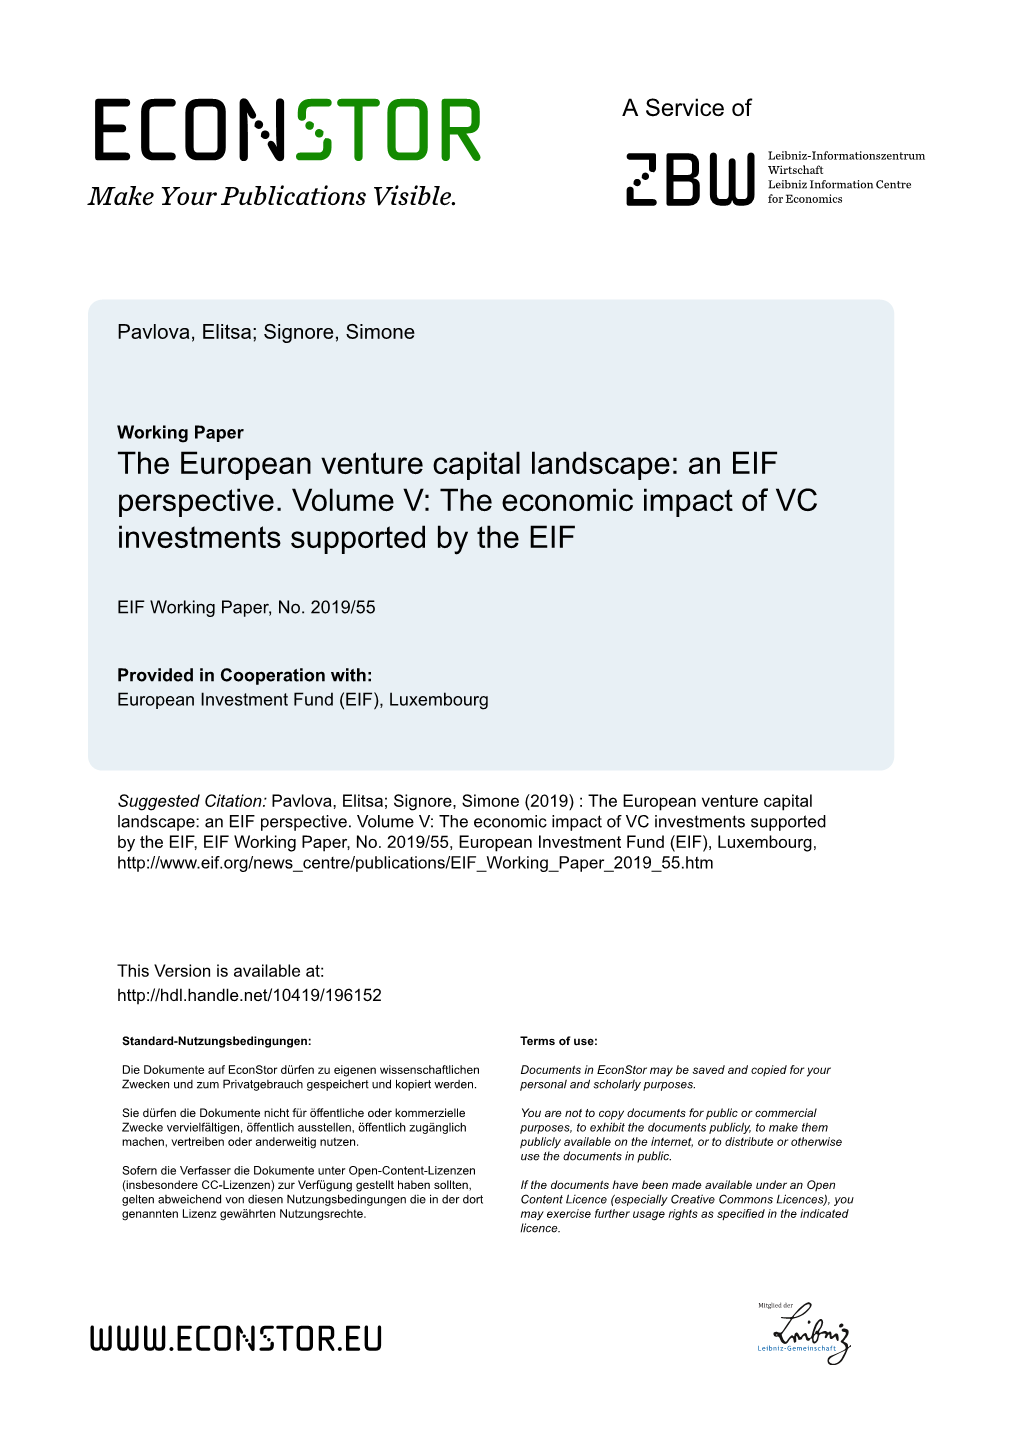 The European Venture Capital Landscape: an EIF Perspective